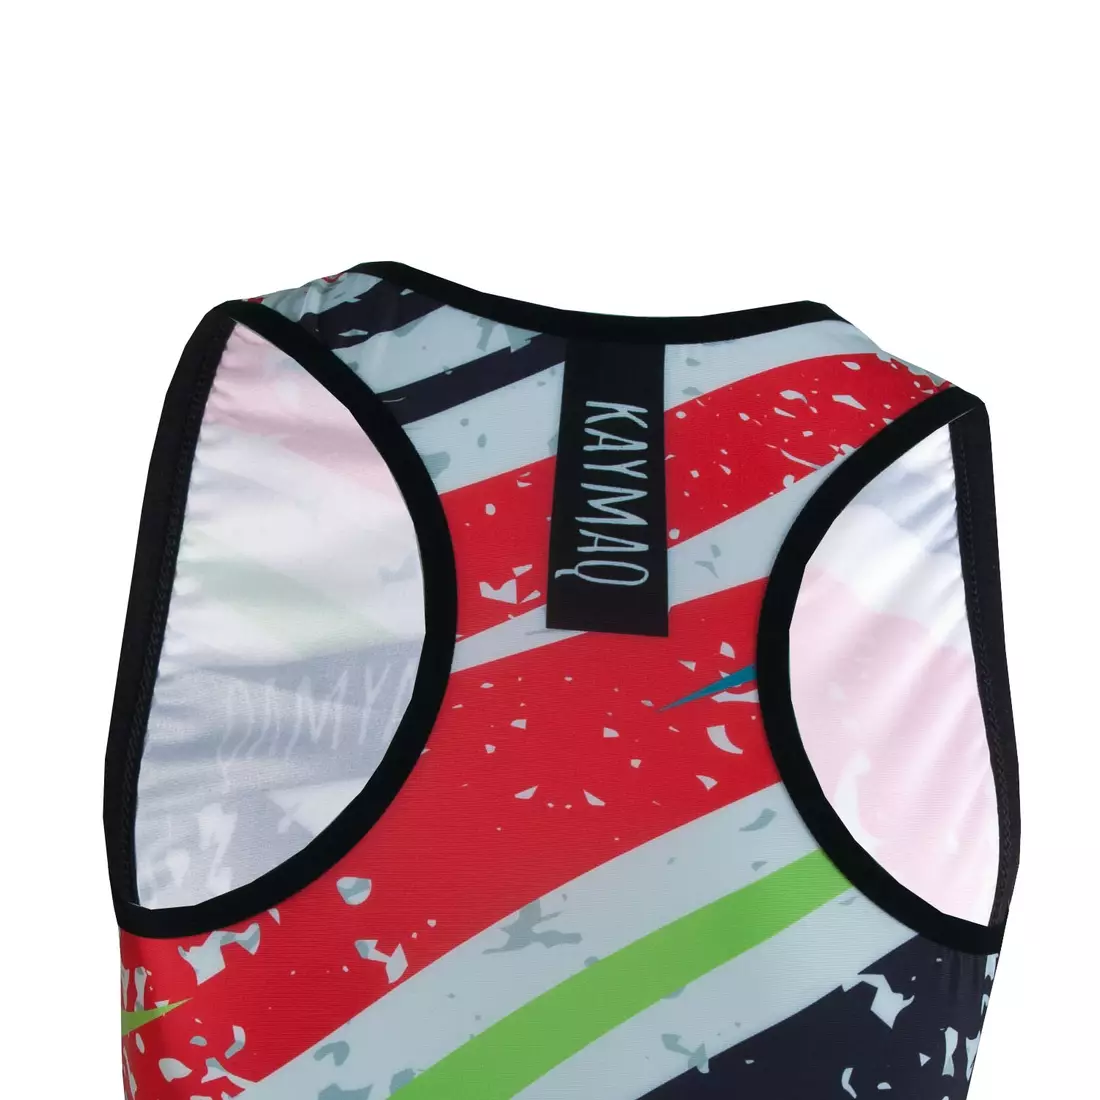 KAYMAQ DESIGN W25 ärmelloses Fahrrad-T-Shirt für Frauen